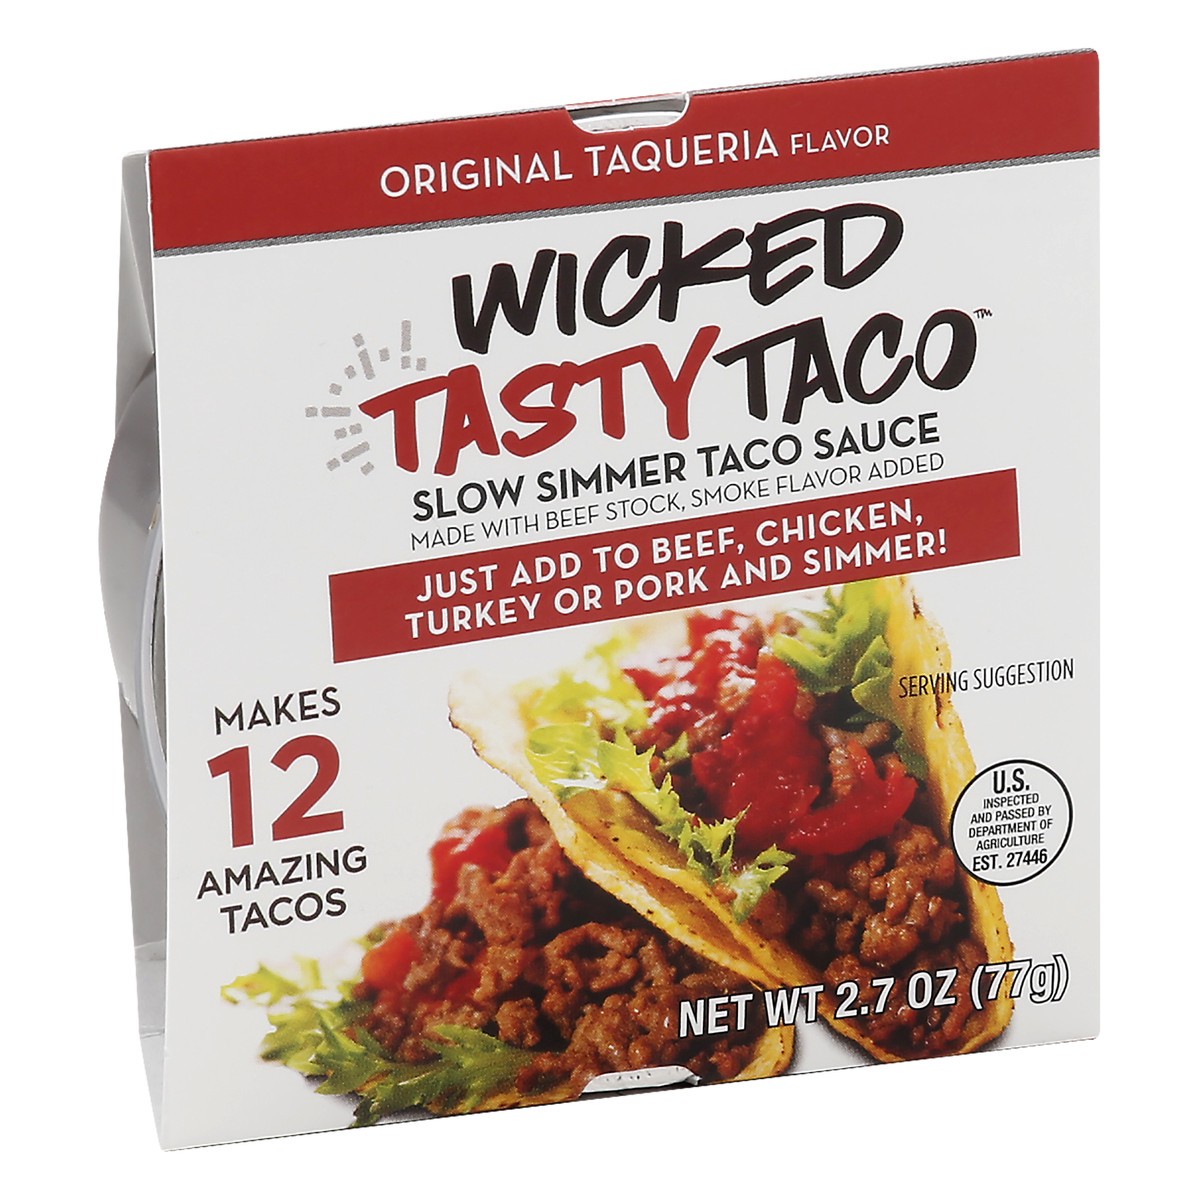 slide 6 of 13, Wicked Tasty Taco Slow Simmer Original Taqueria Flavor Taco Sauce 2.7 oz, 2.7 oz